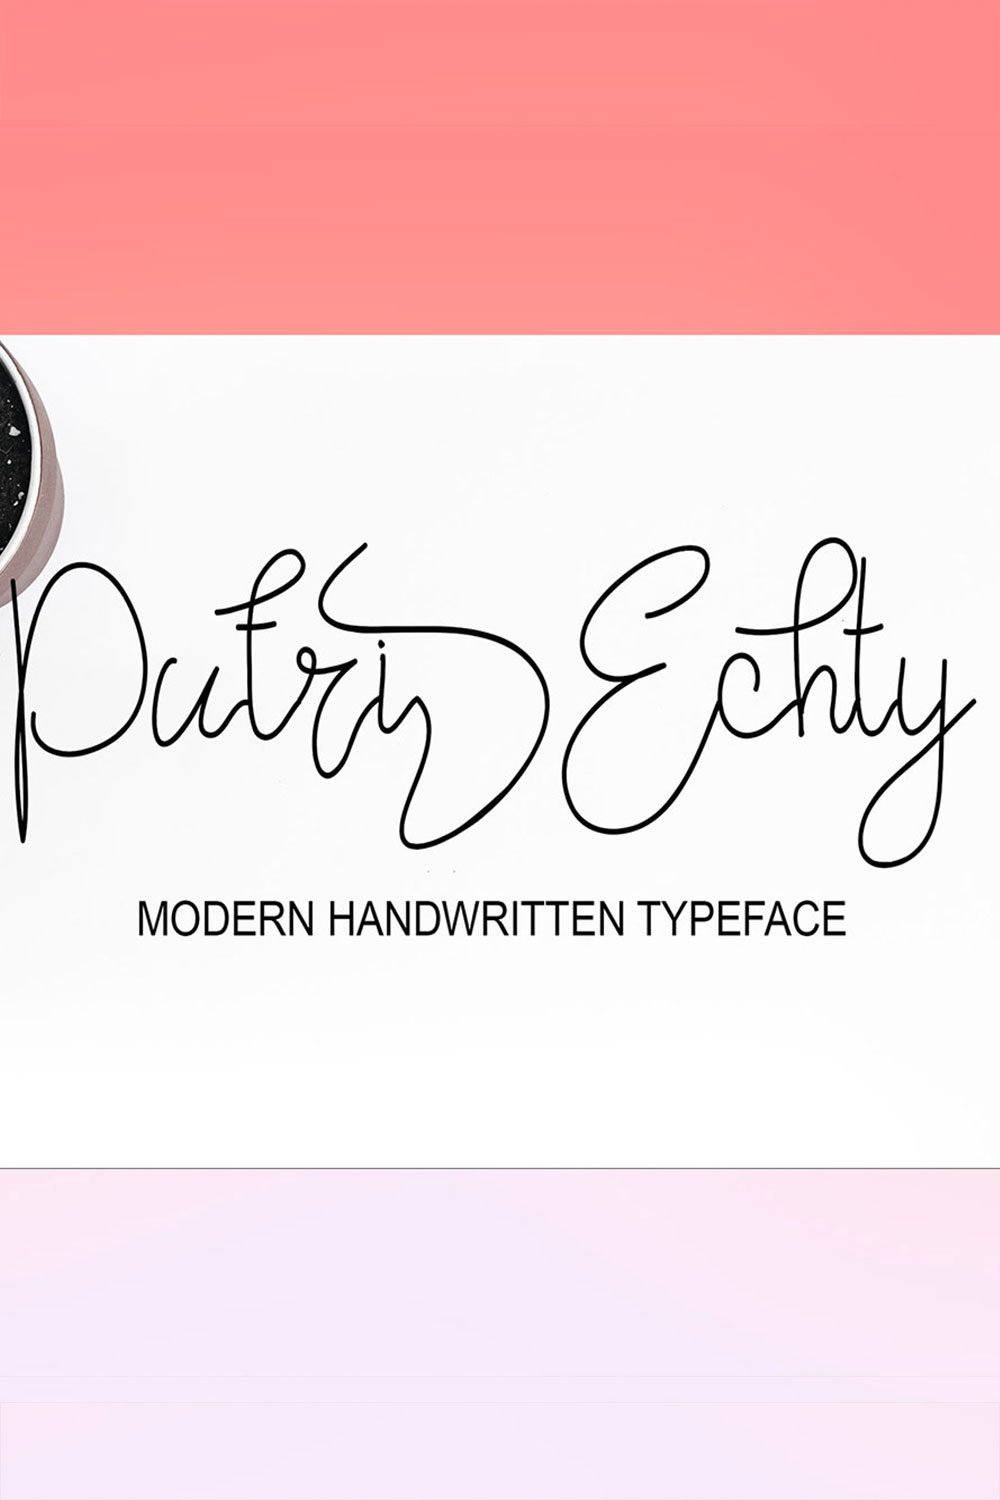 Putri Echty Signature Font Pinterest collage image.